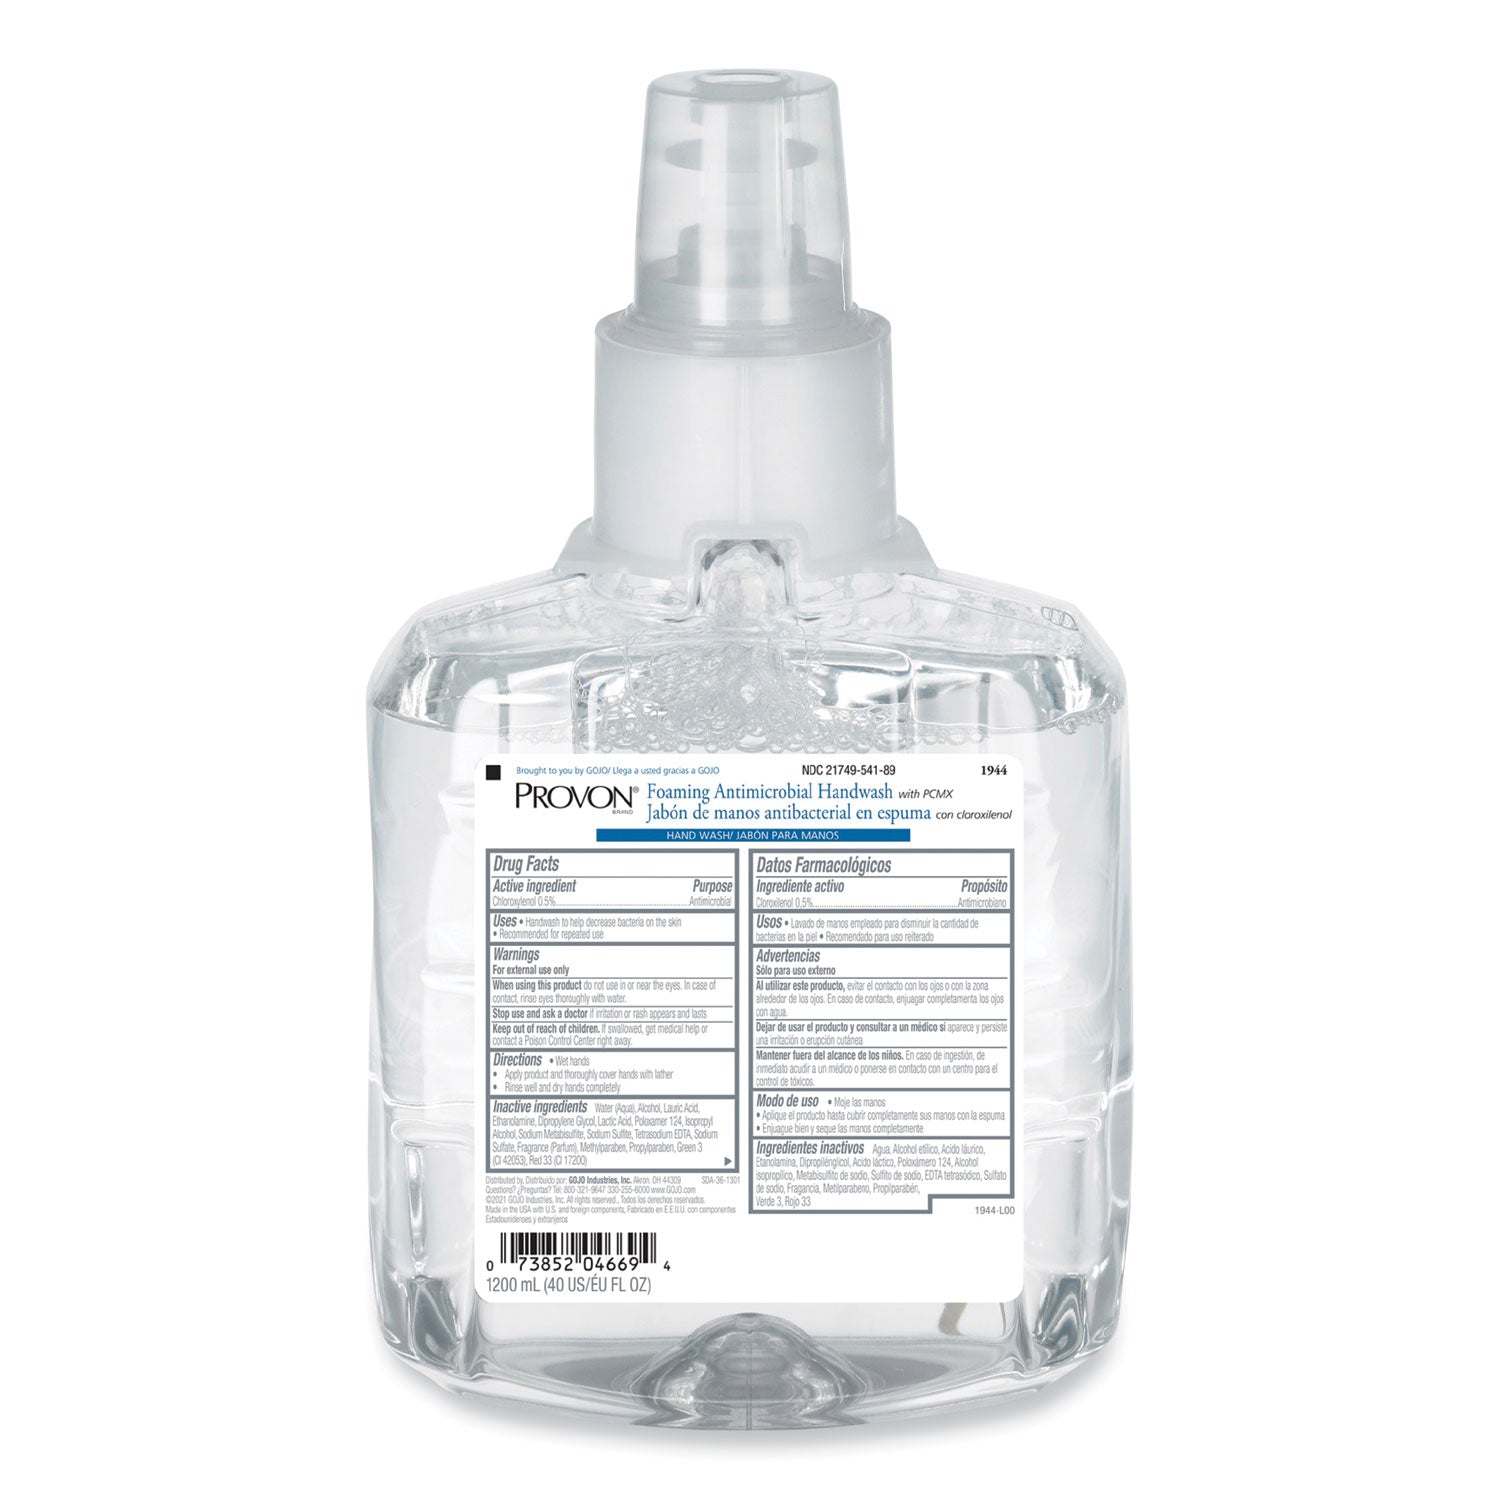 foaming-antimicrobial-handwash-with-pcmx-for-ltx-12-floral-1200-ml-refill-2-carton_goj194402 - 1